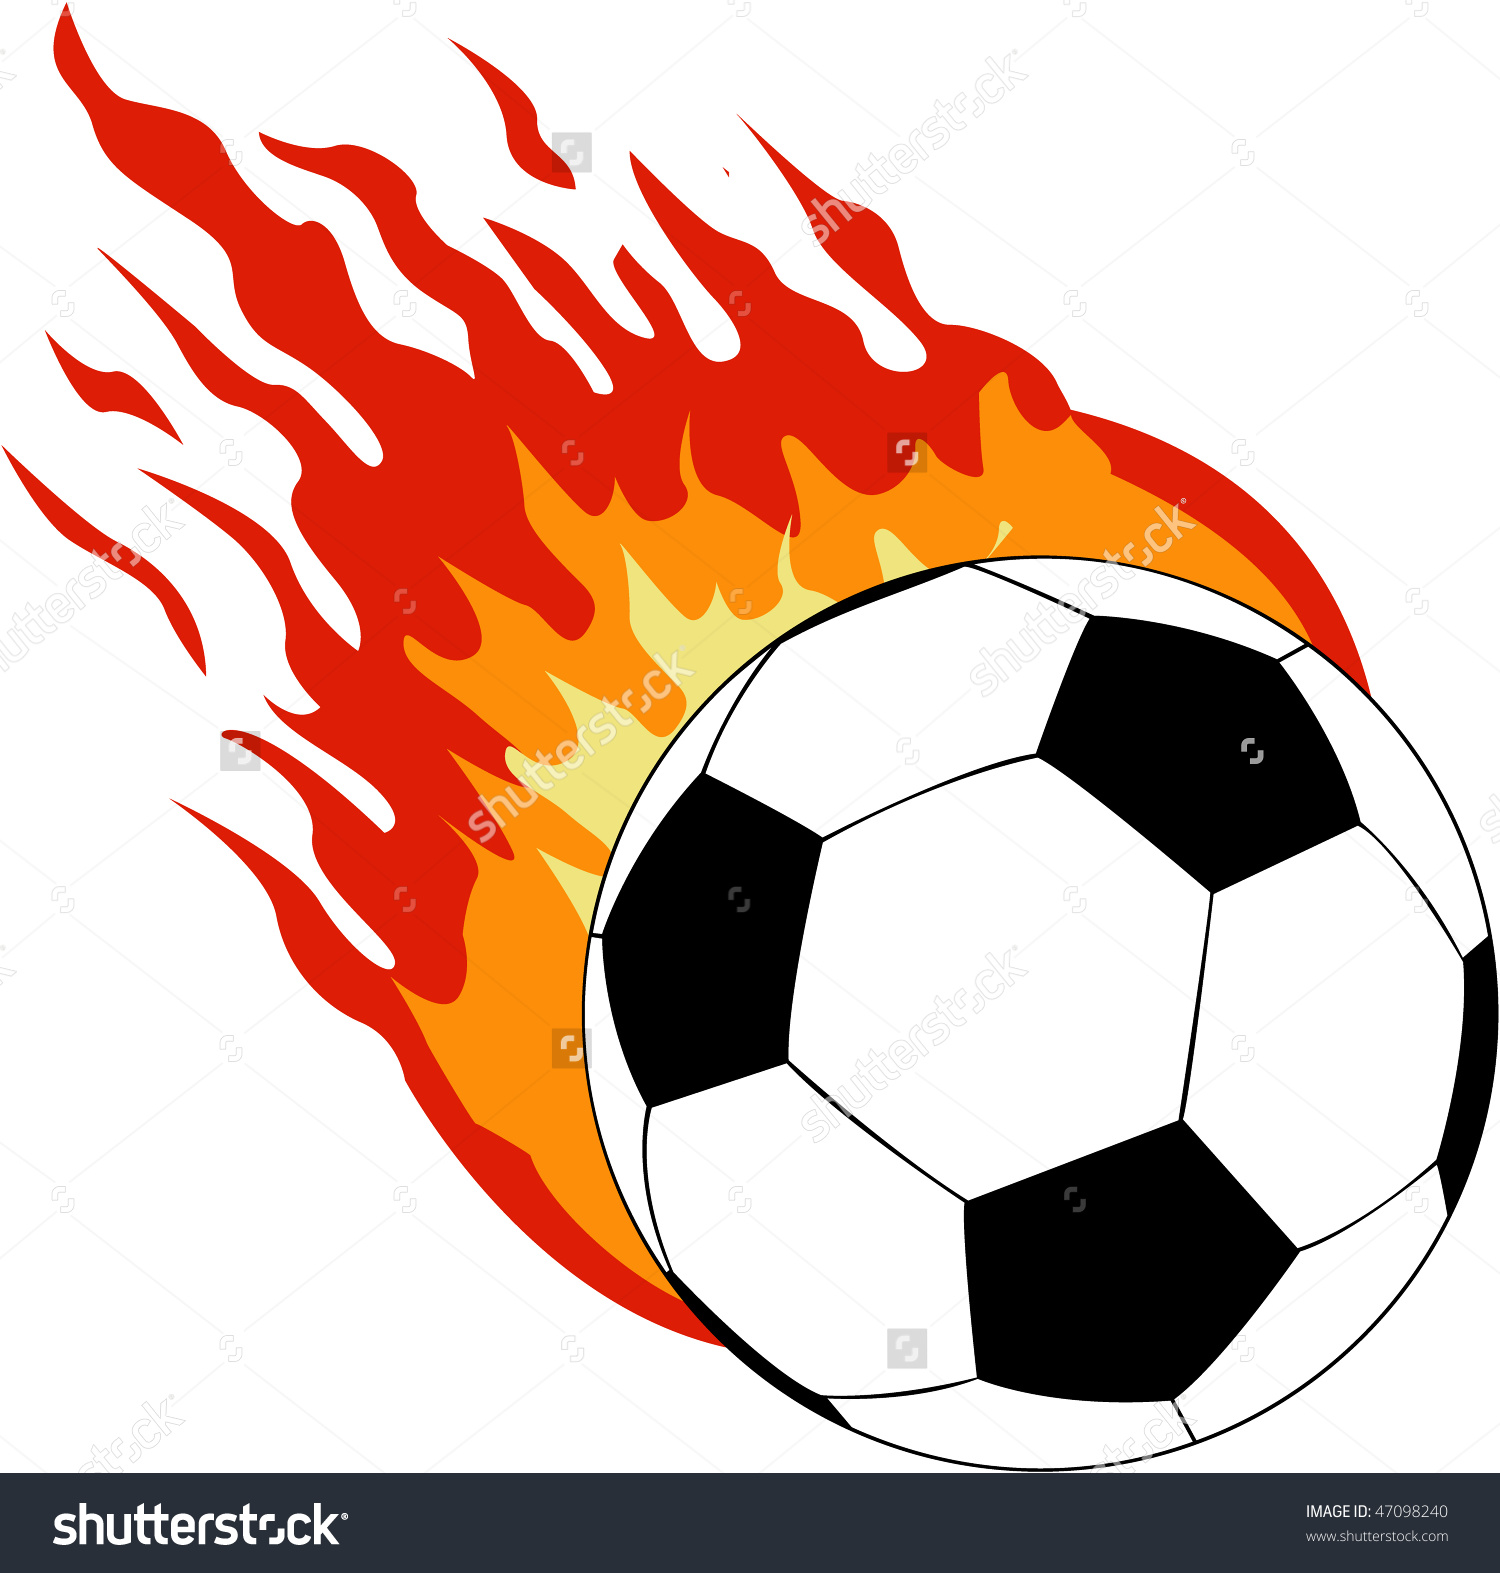 Flaming soccer ball.